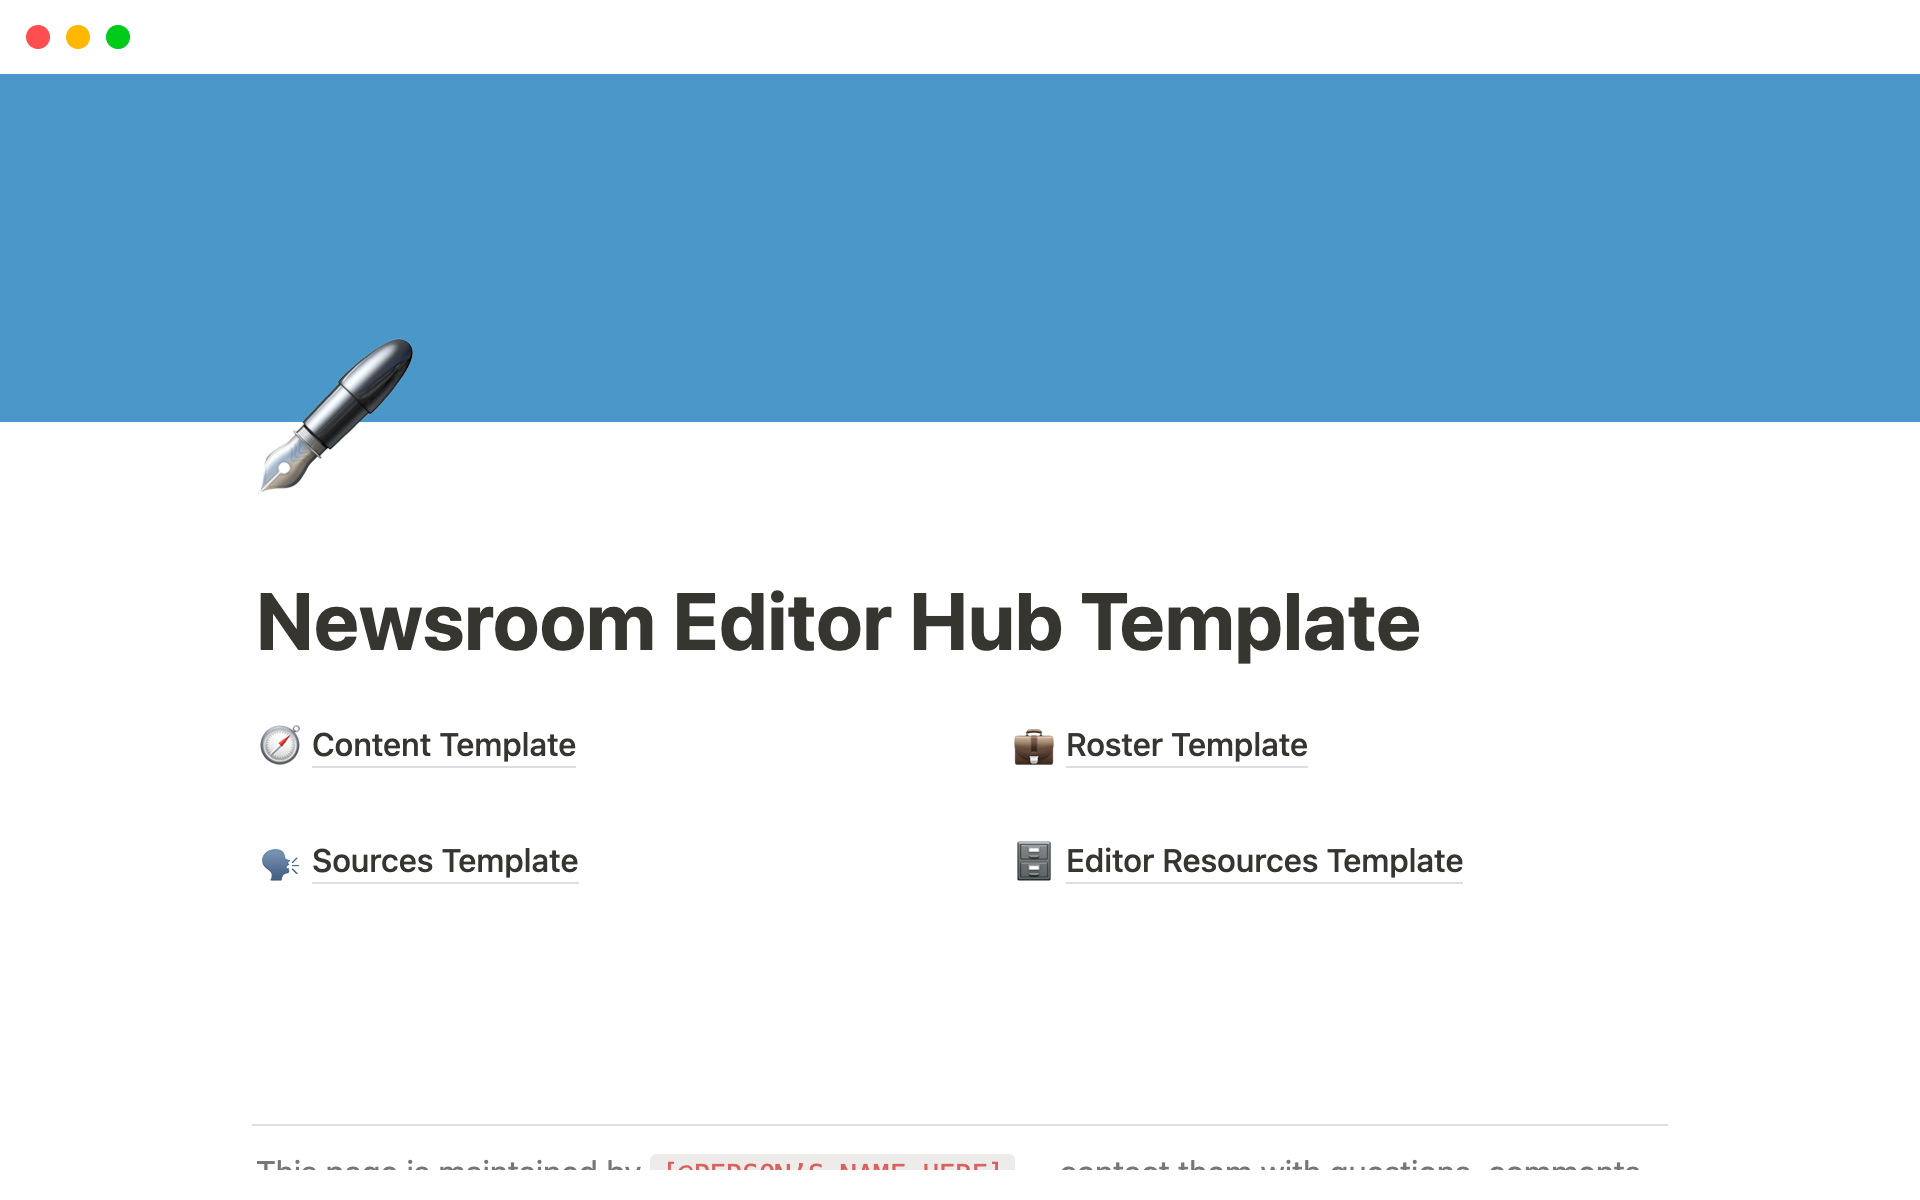 newsroom-editor-hub-template-sam-catania-desktop